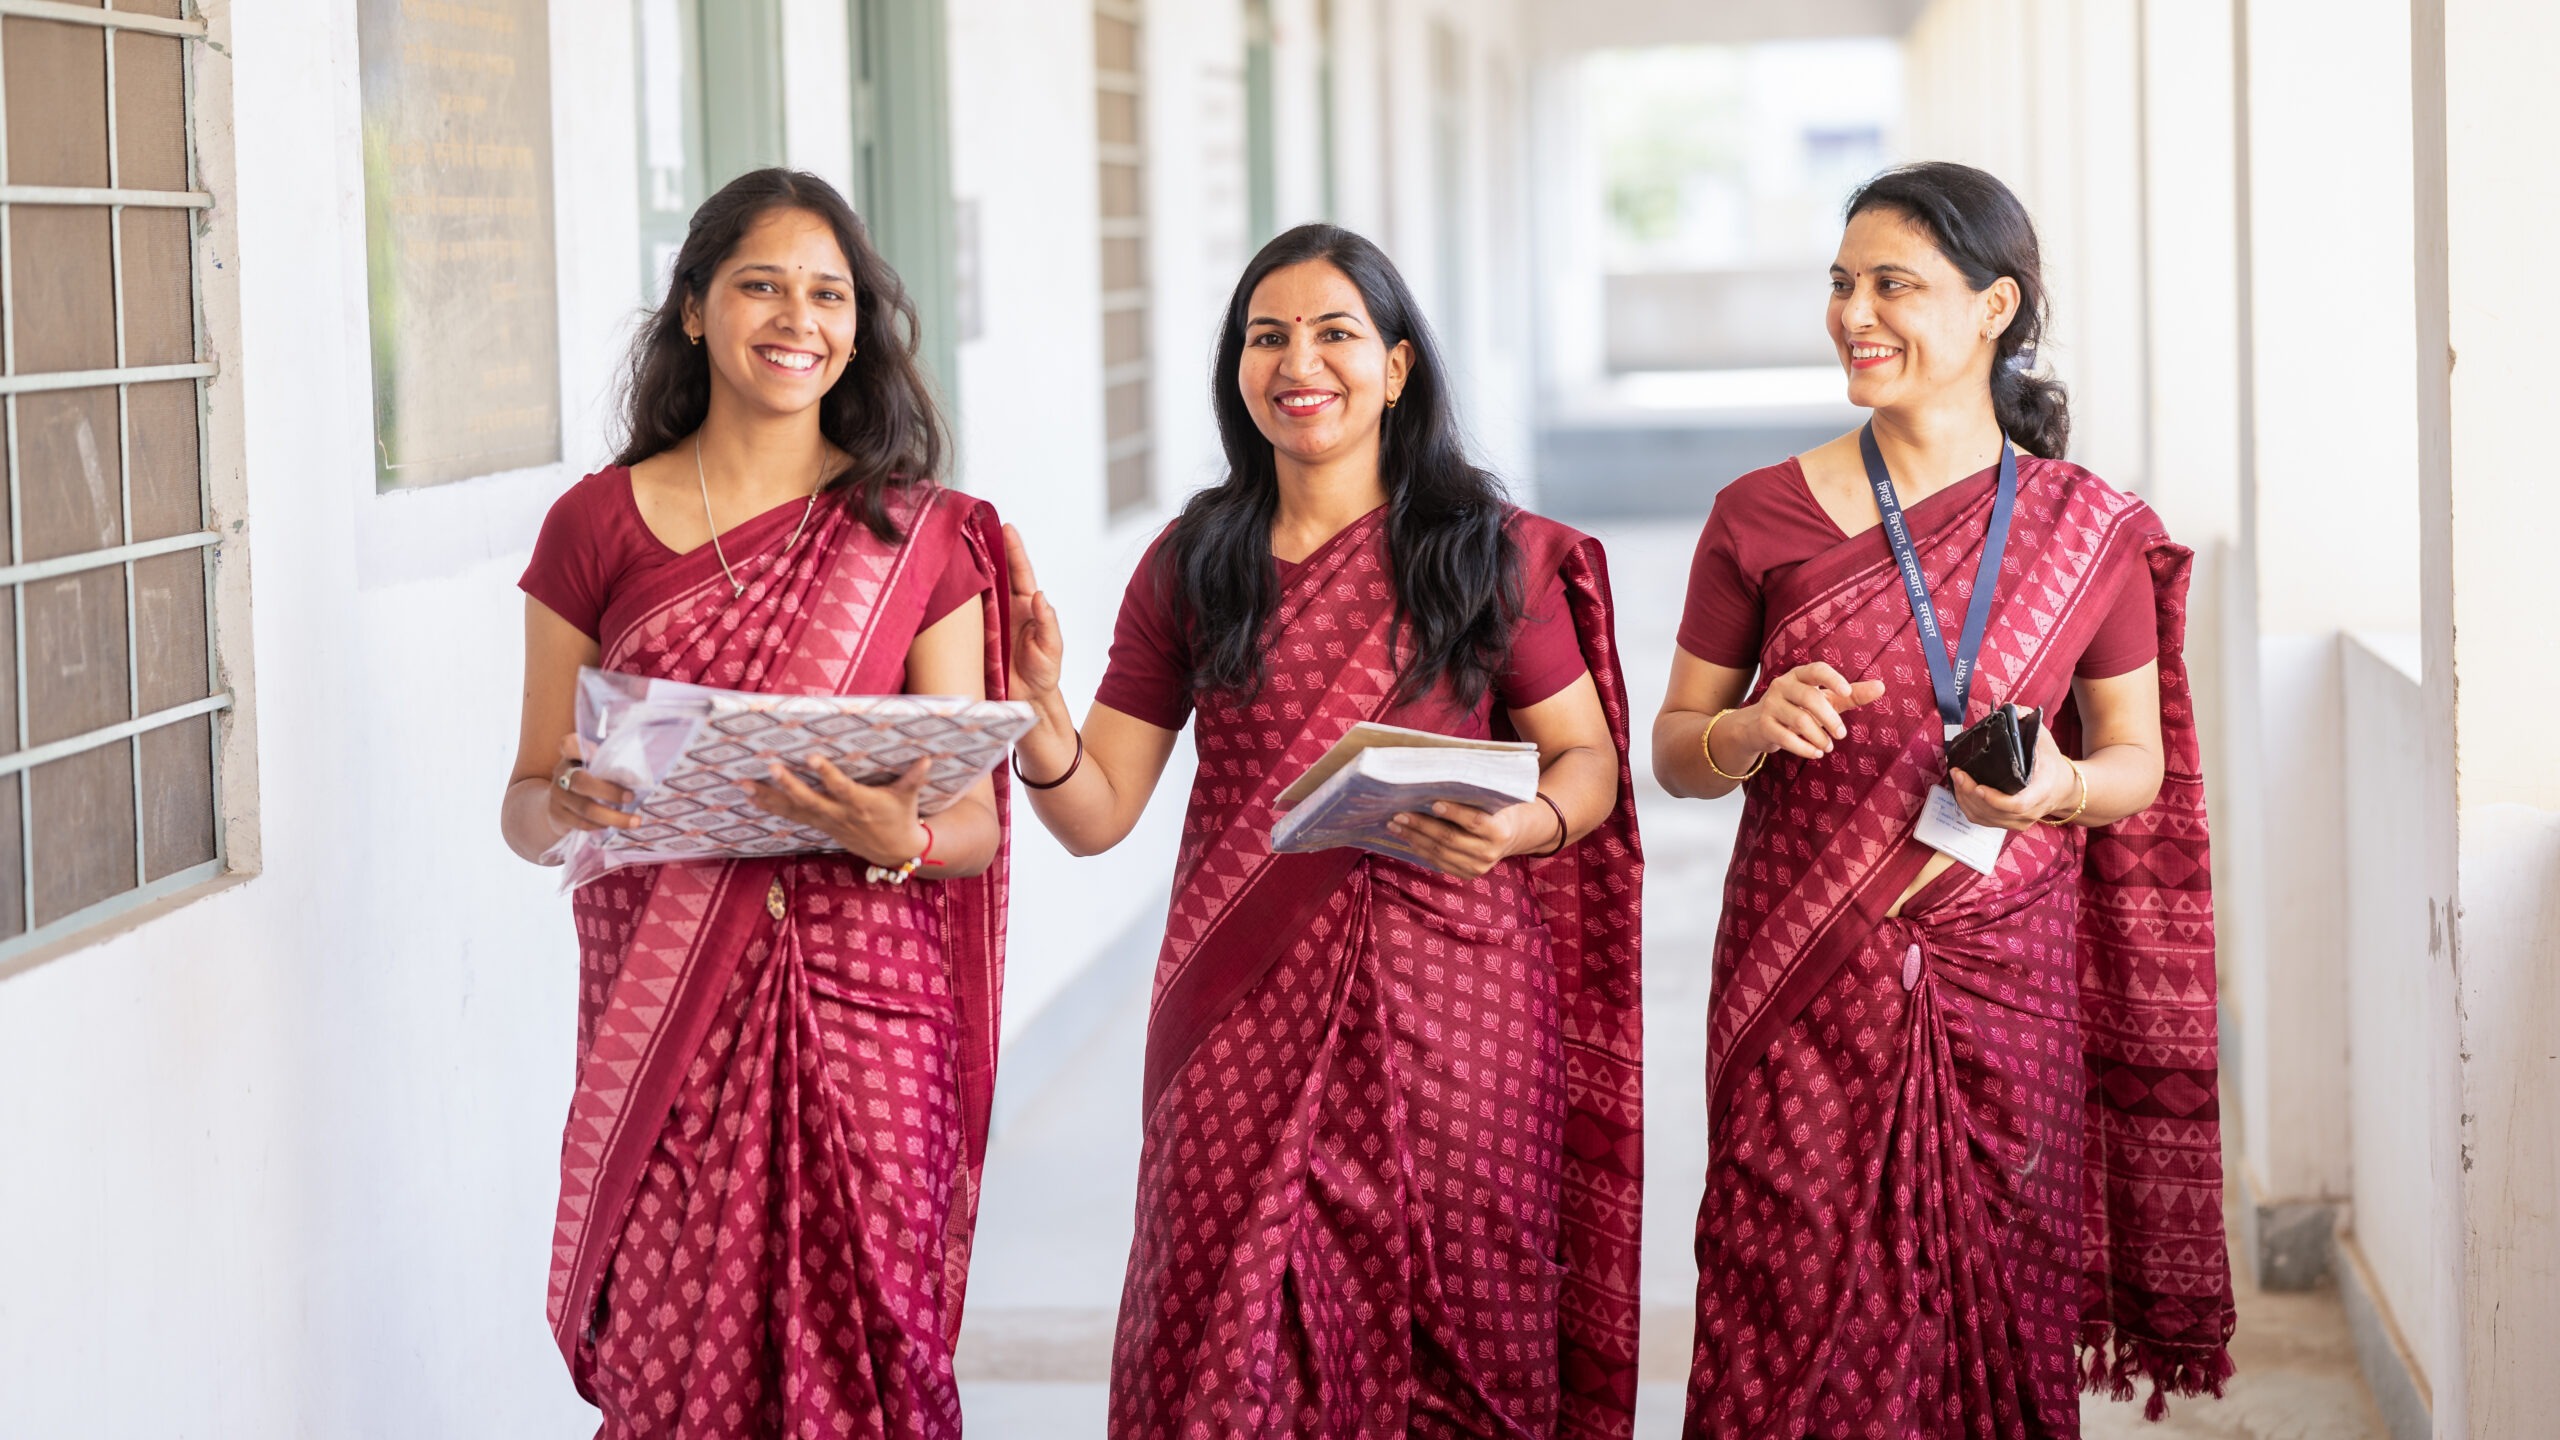 Three teachers at Mahatma Gandhi Government School walking together through the halls smiling.